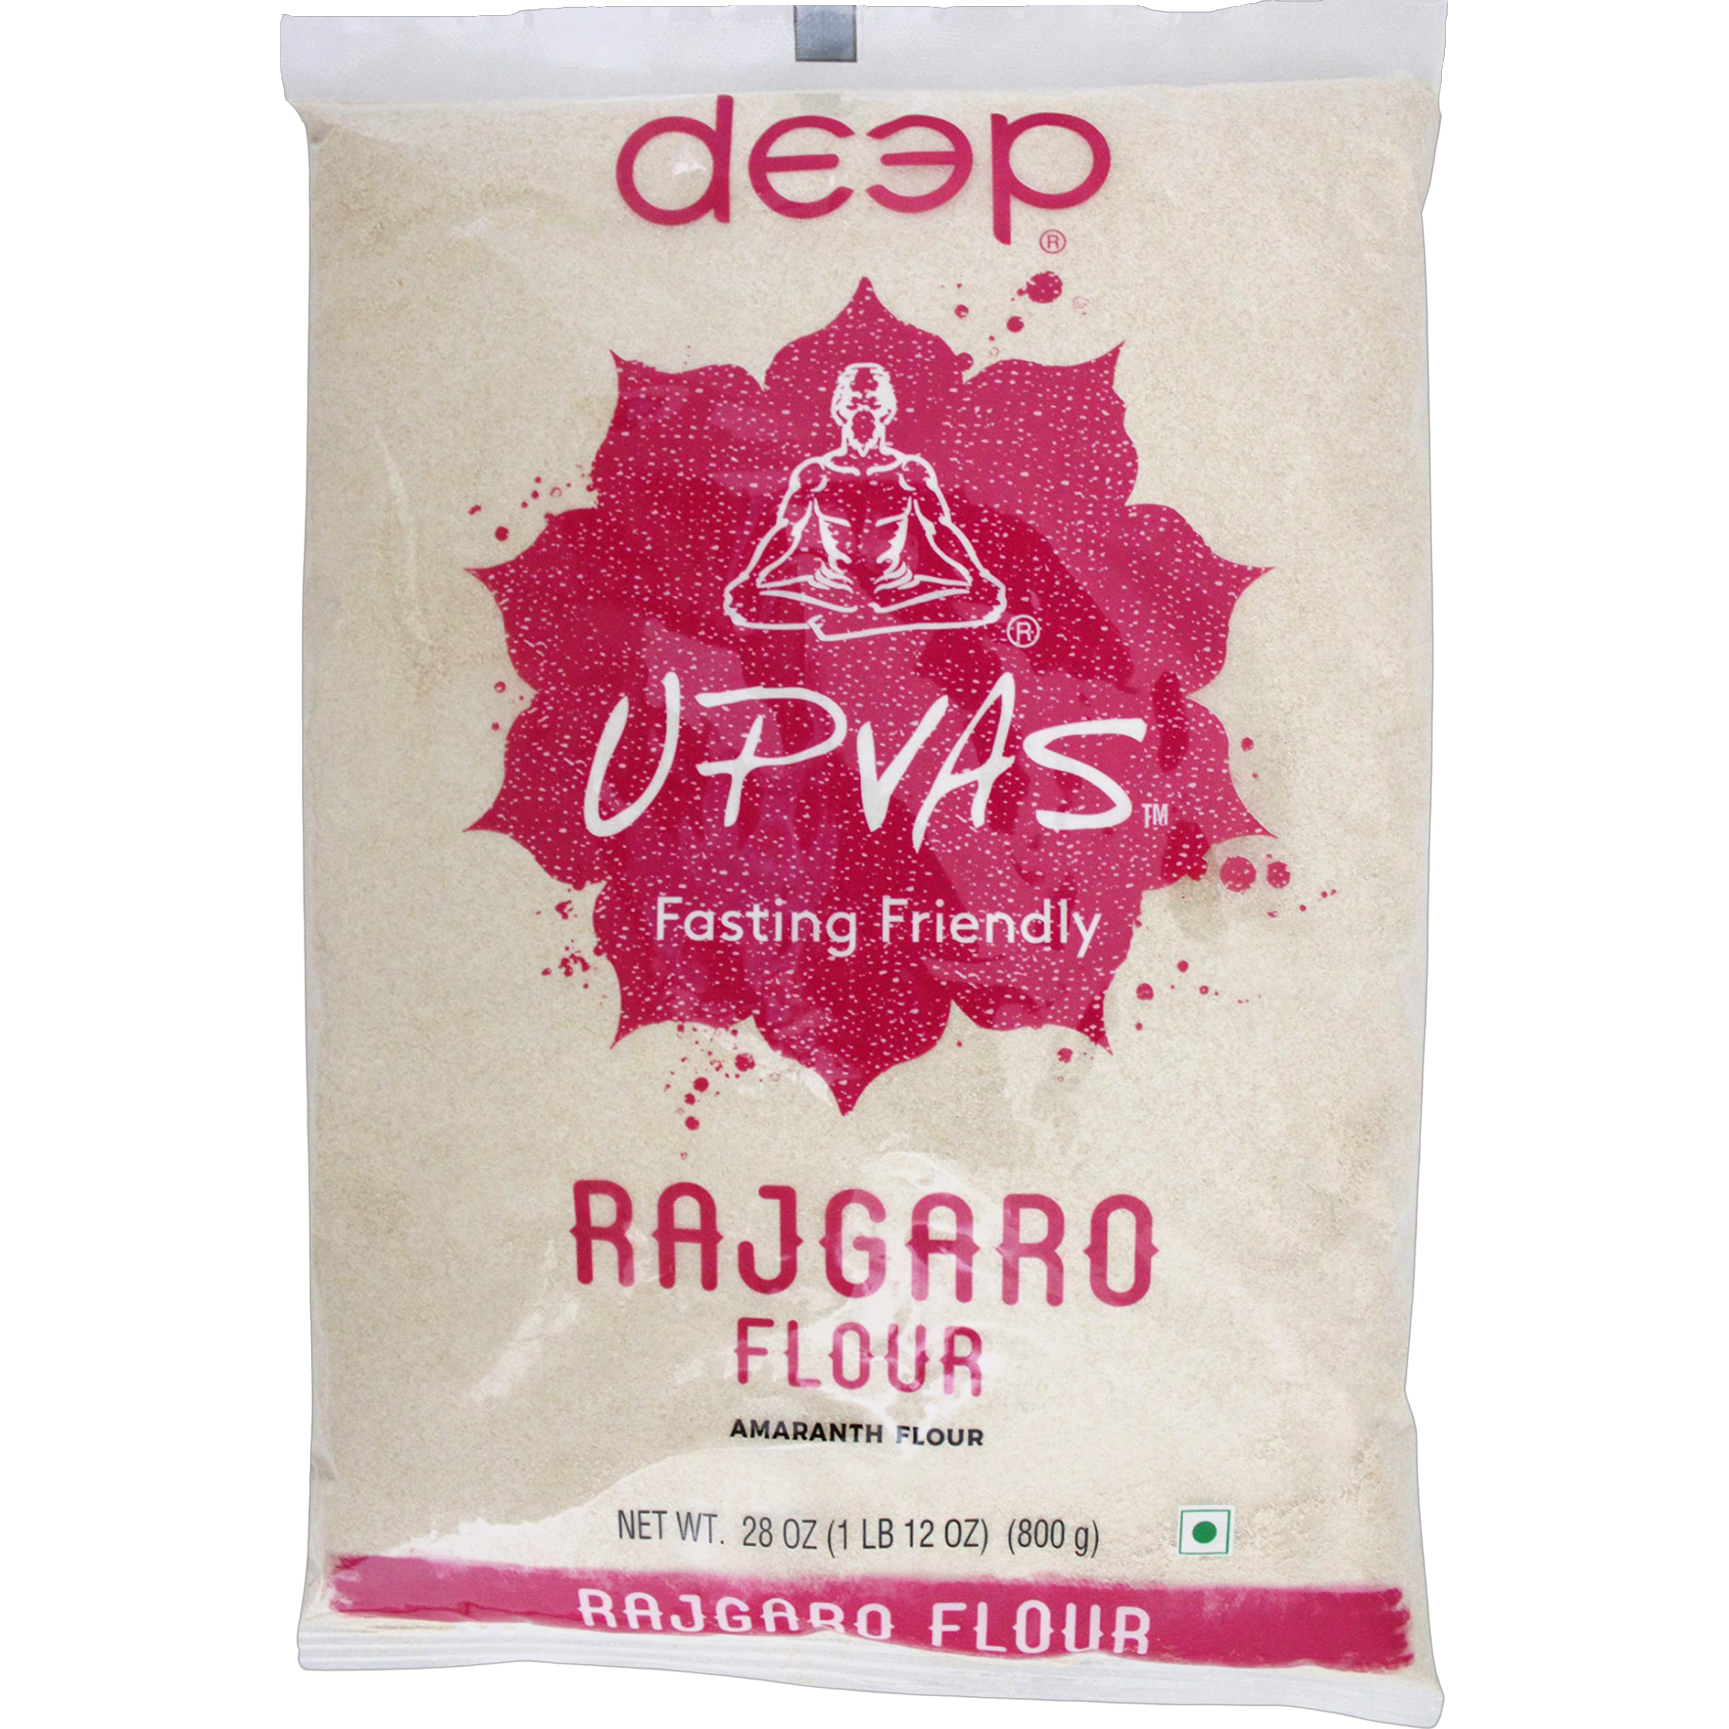 Pack of 5 - Deep Upvas Rajgaro Flour - 400 Gm (14 Oz)